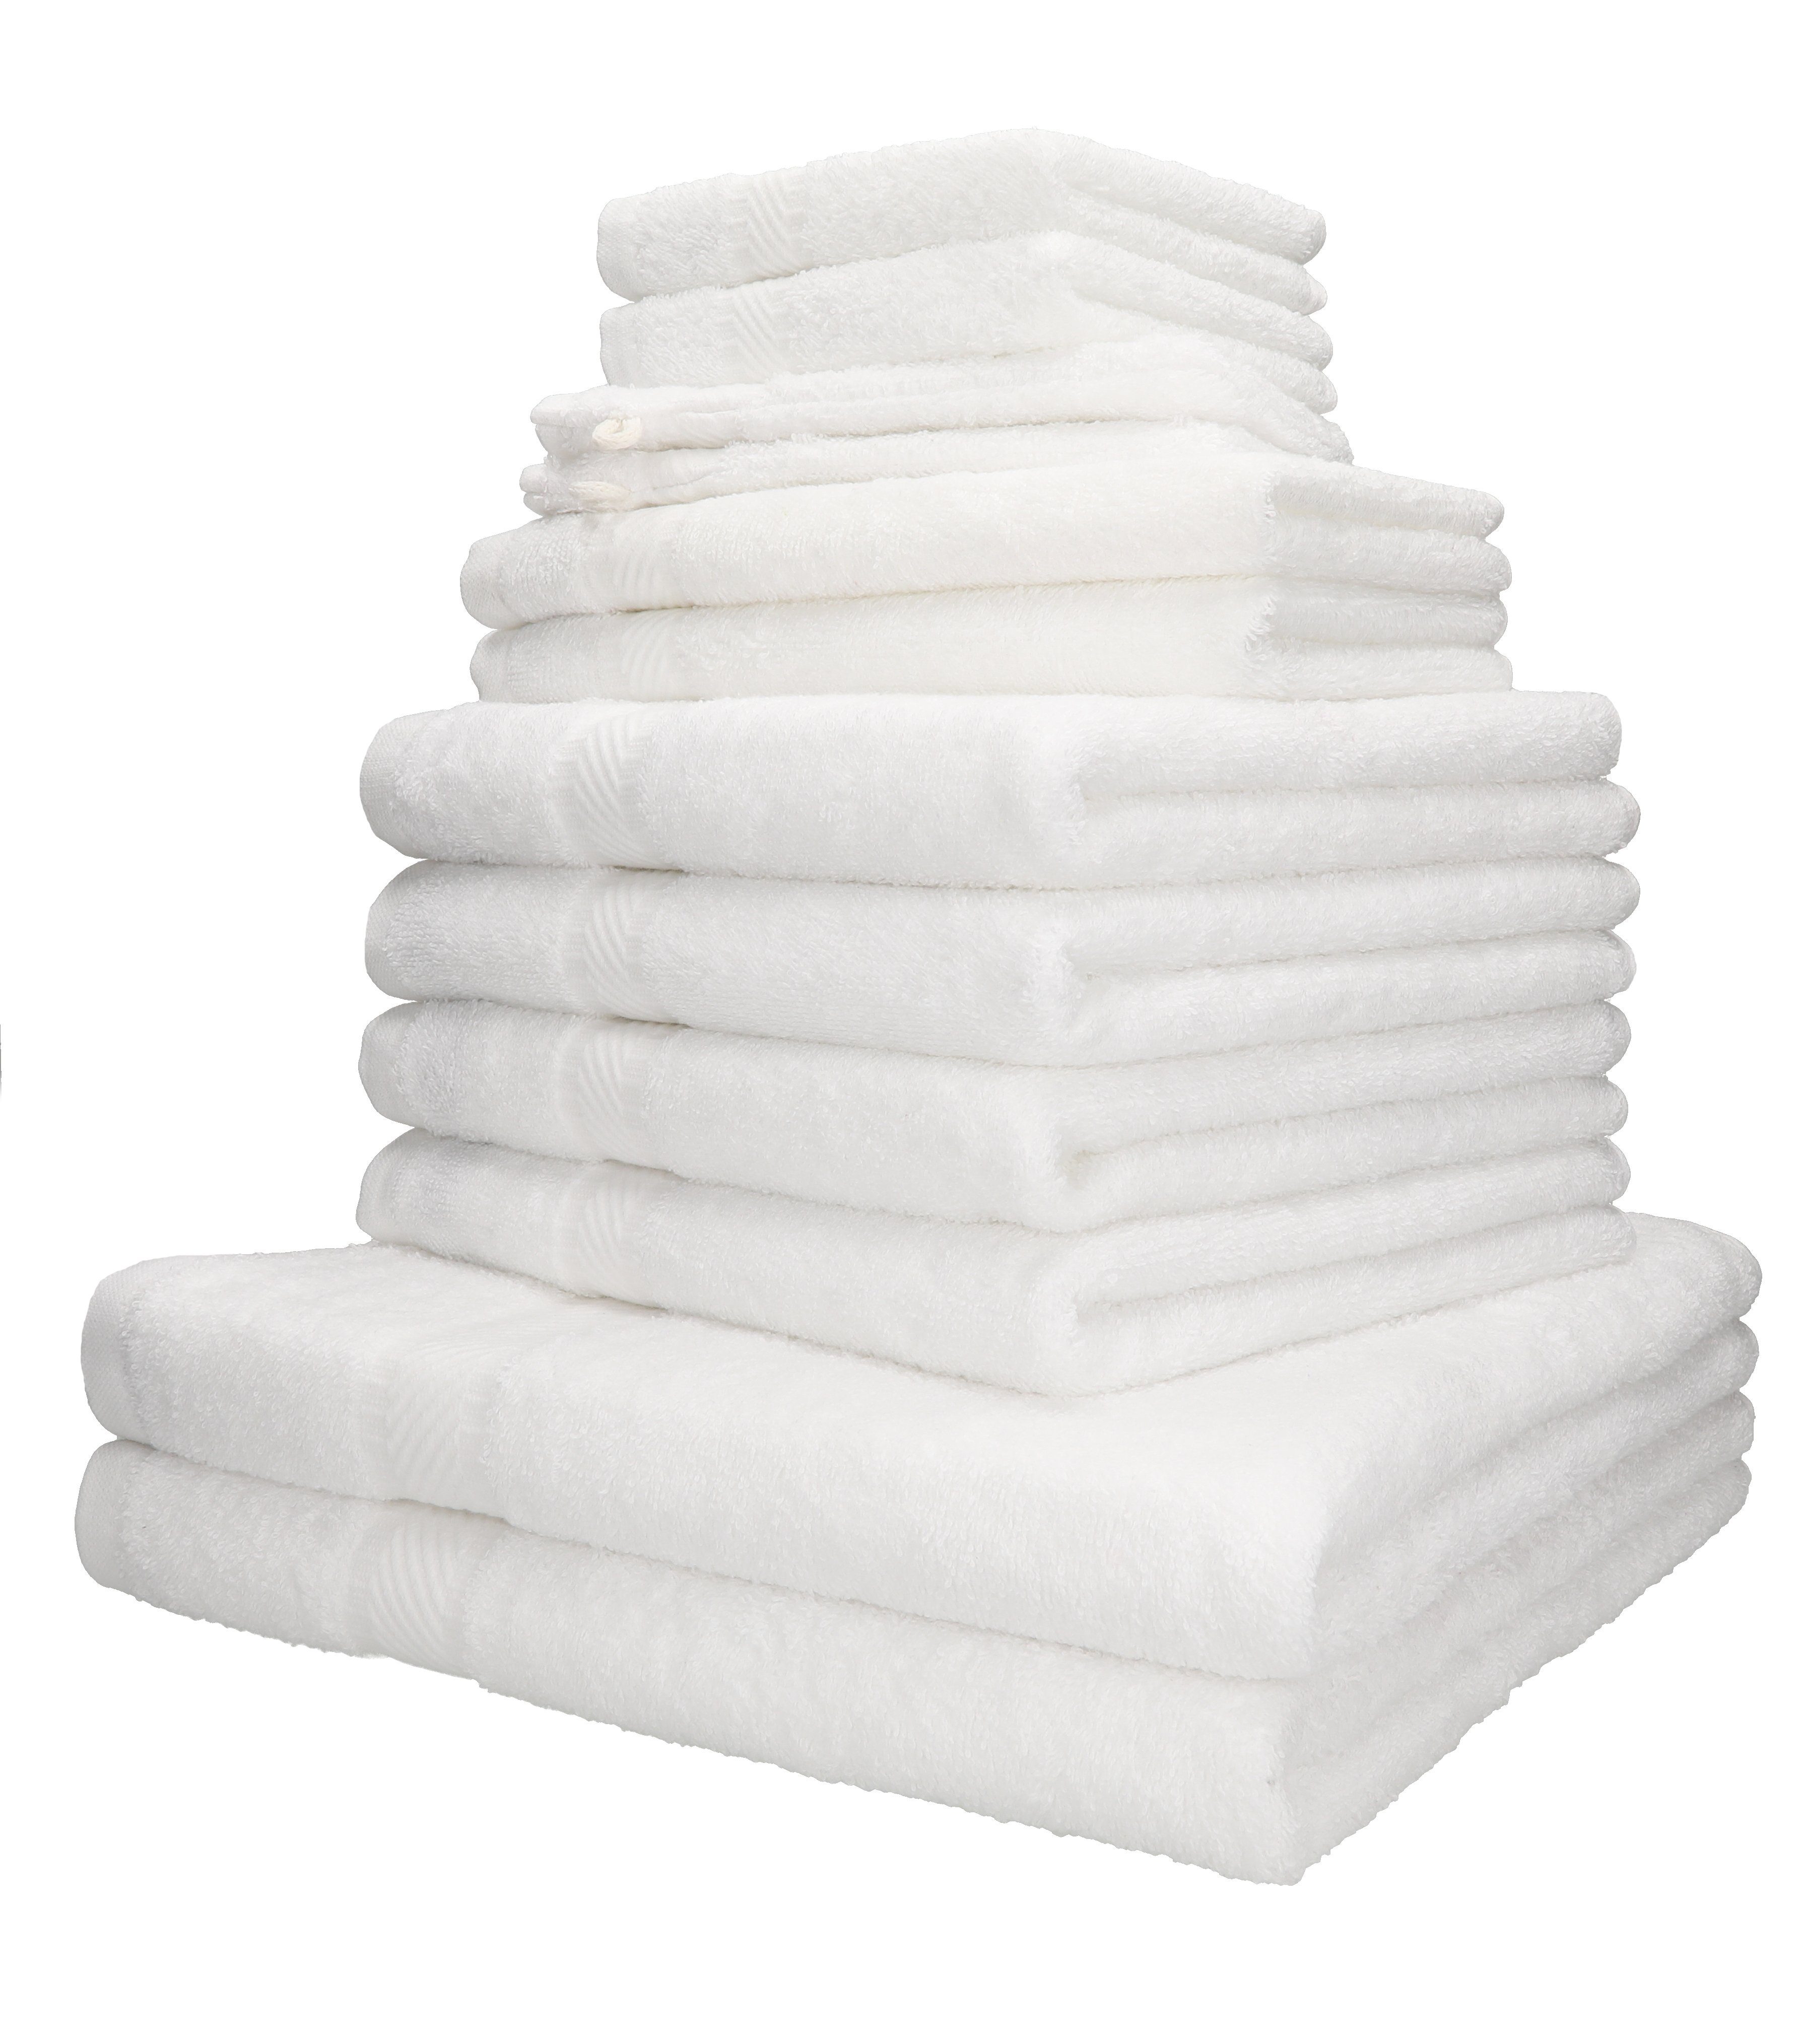 Betz Handtuch Set 12-TLG. Handtuch-Set Palermo 100% Baumwolle 2 Liegetücher 4 Handtücher 2 Gästetücher 2 Seiftücher 2 Waschhandschuhe, 100% Baumwolle, (12-tlg) weiß